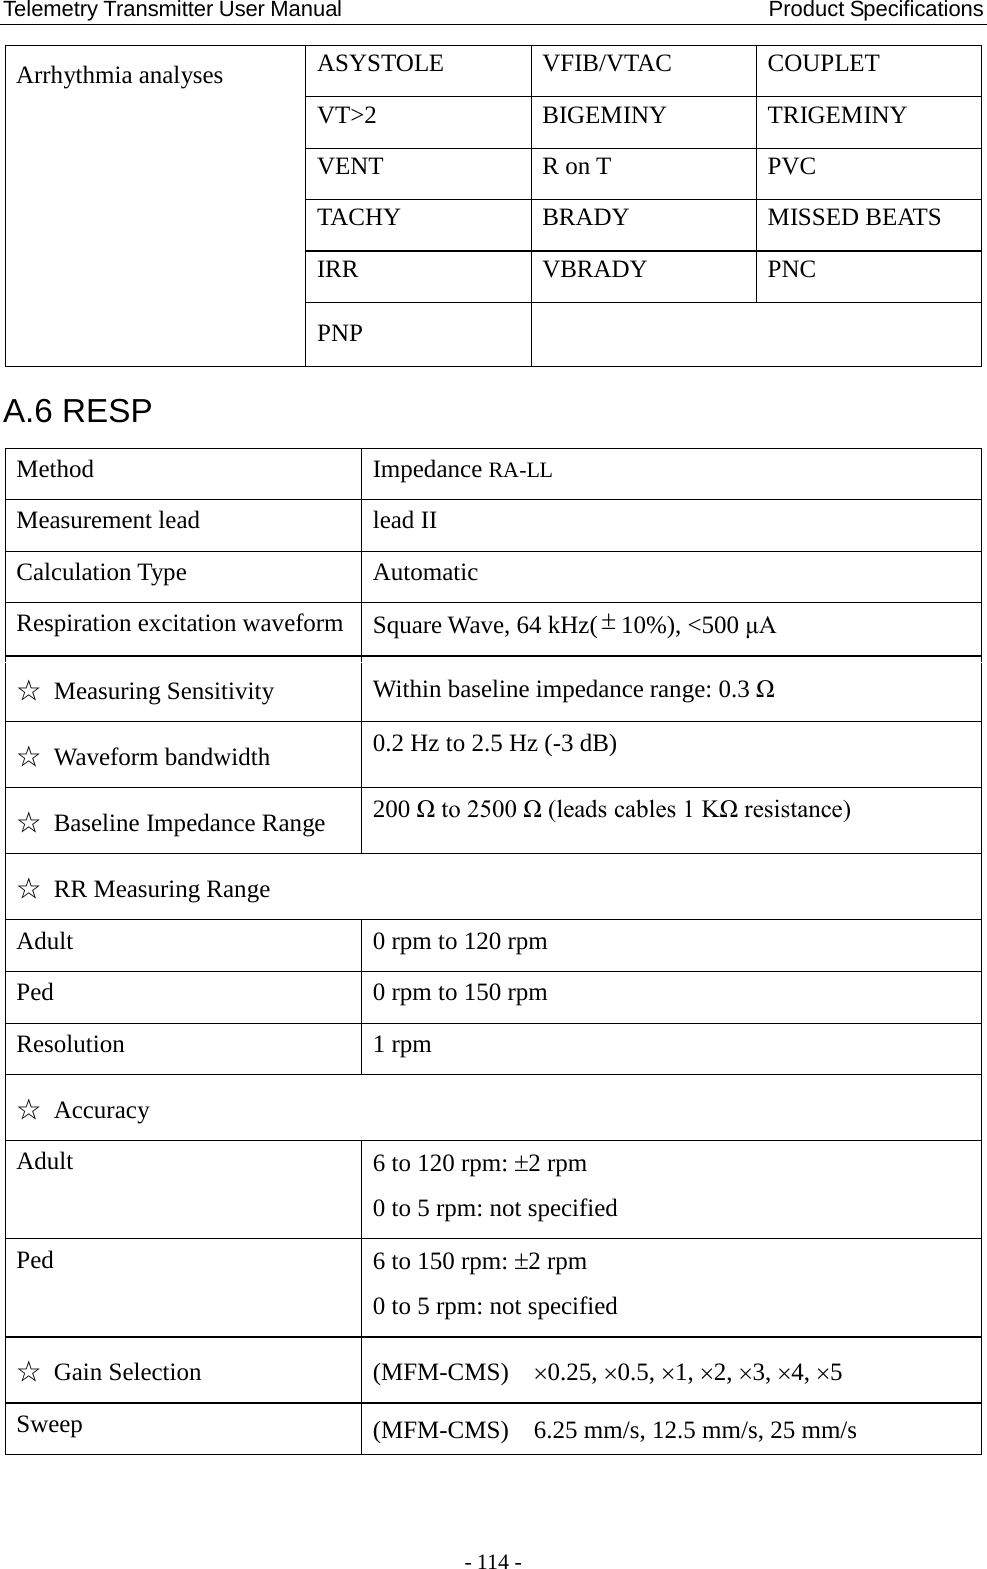 Telemetry Transmitter User Manual                                       Product Specifications   Arrhythmia analyses ASYSTOLE VFIB/VTAC COUPLET VT&gt;2 BIGEMINY TRIGEMINY VENT R on T PVC TACHY BRADY MISSED BEATS IRR VBRADY PNC PNP   A.6 RESP Method Impedance RA-LL Measurement lead lead II Calculation Type Automatic Respiration excitation waveform Square Wave, 64 kHz(±10%), &lt;500 μA ☆ Measuring Sensitivity Within baseline impedance range: 0.3 Ω ☆ Waveform bandwidth 0.2 Hz to 2.5 Hz (-3 dB) ☆ Baseline Impedance Range 200 Ω to 2500 Ω (leads cables 1 KΩ resistance) ☆ RR Measuring Range Adult   0 rpm to 120 rpm Ped   0 rpm to 150 rpm Resolution   1 rpm ☆ Accuracy Adult   6 to 120 rpm: ±2 rpm 0 to 5 rpm: not specified Ped   6 to 150 rpm: ±2 rpm 0 to 5 rpm: not specified ☆ Gain Selection (MFM-CMS)  ×0.25, ×0.5, ×1, ×2, ×3, ×4, ×5   Sweep (MFM-CMS)  6.25 mm/s, 12.5 mm/s, 25 mm/s - 114 - 